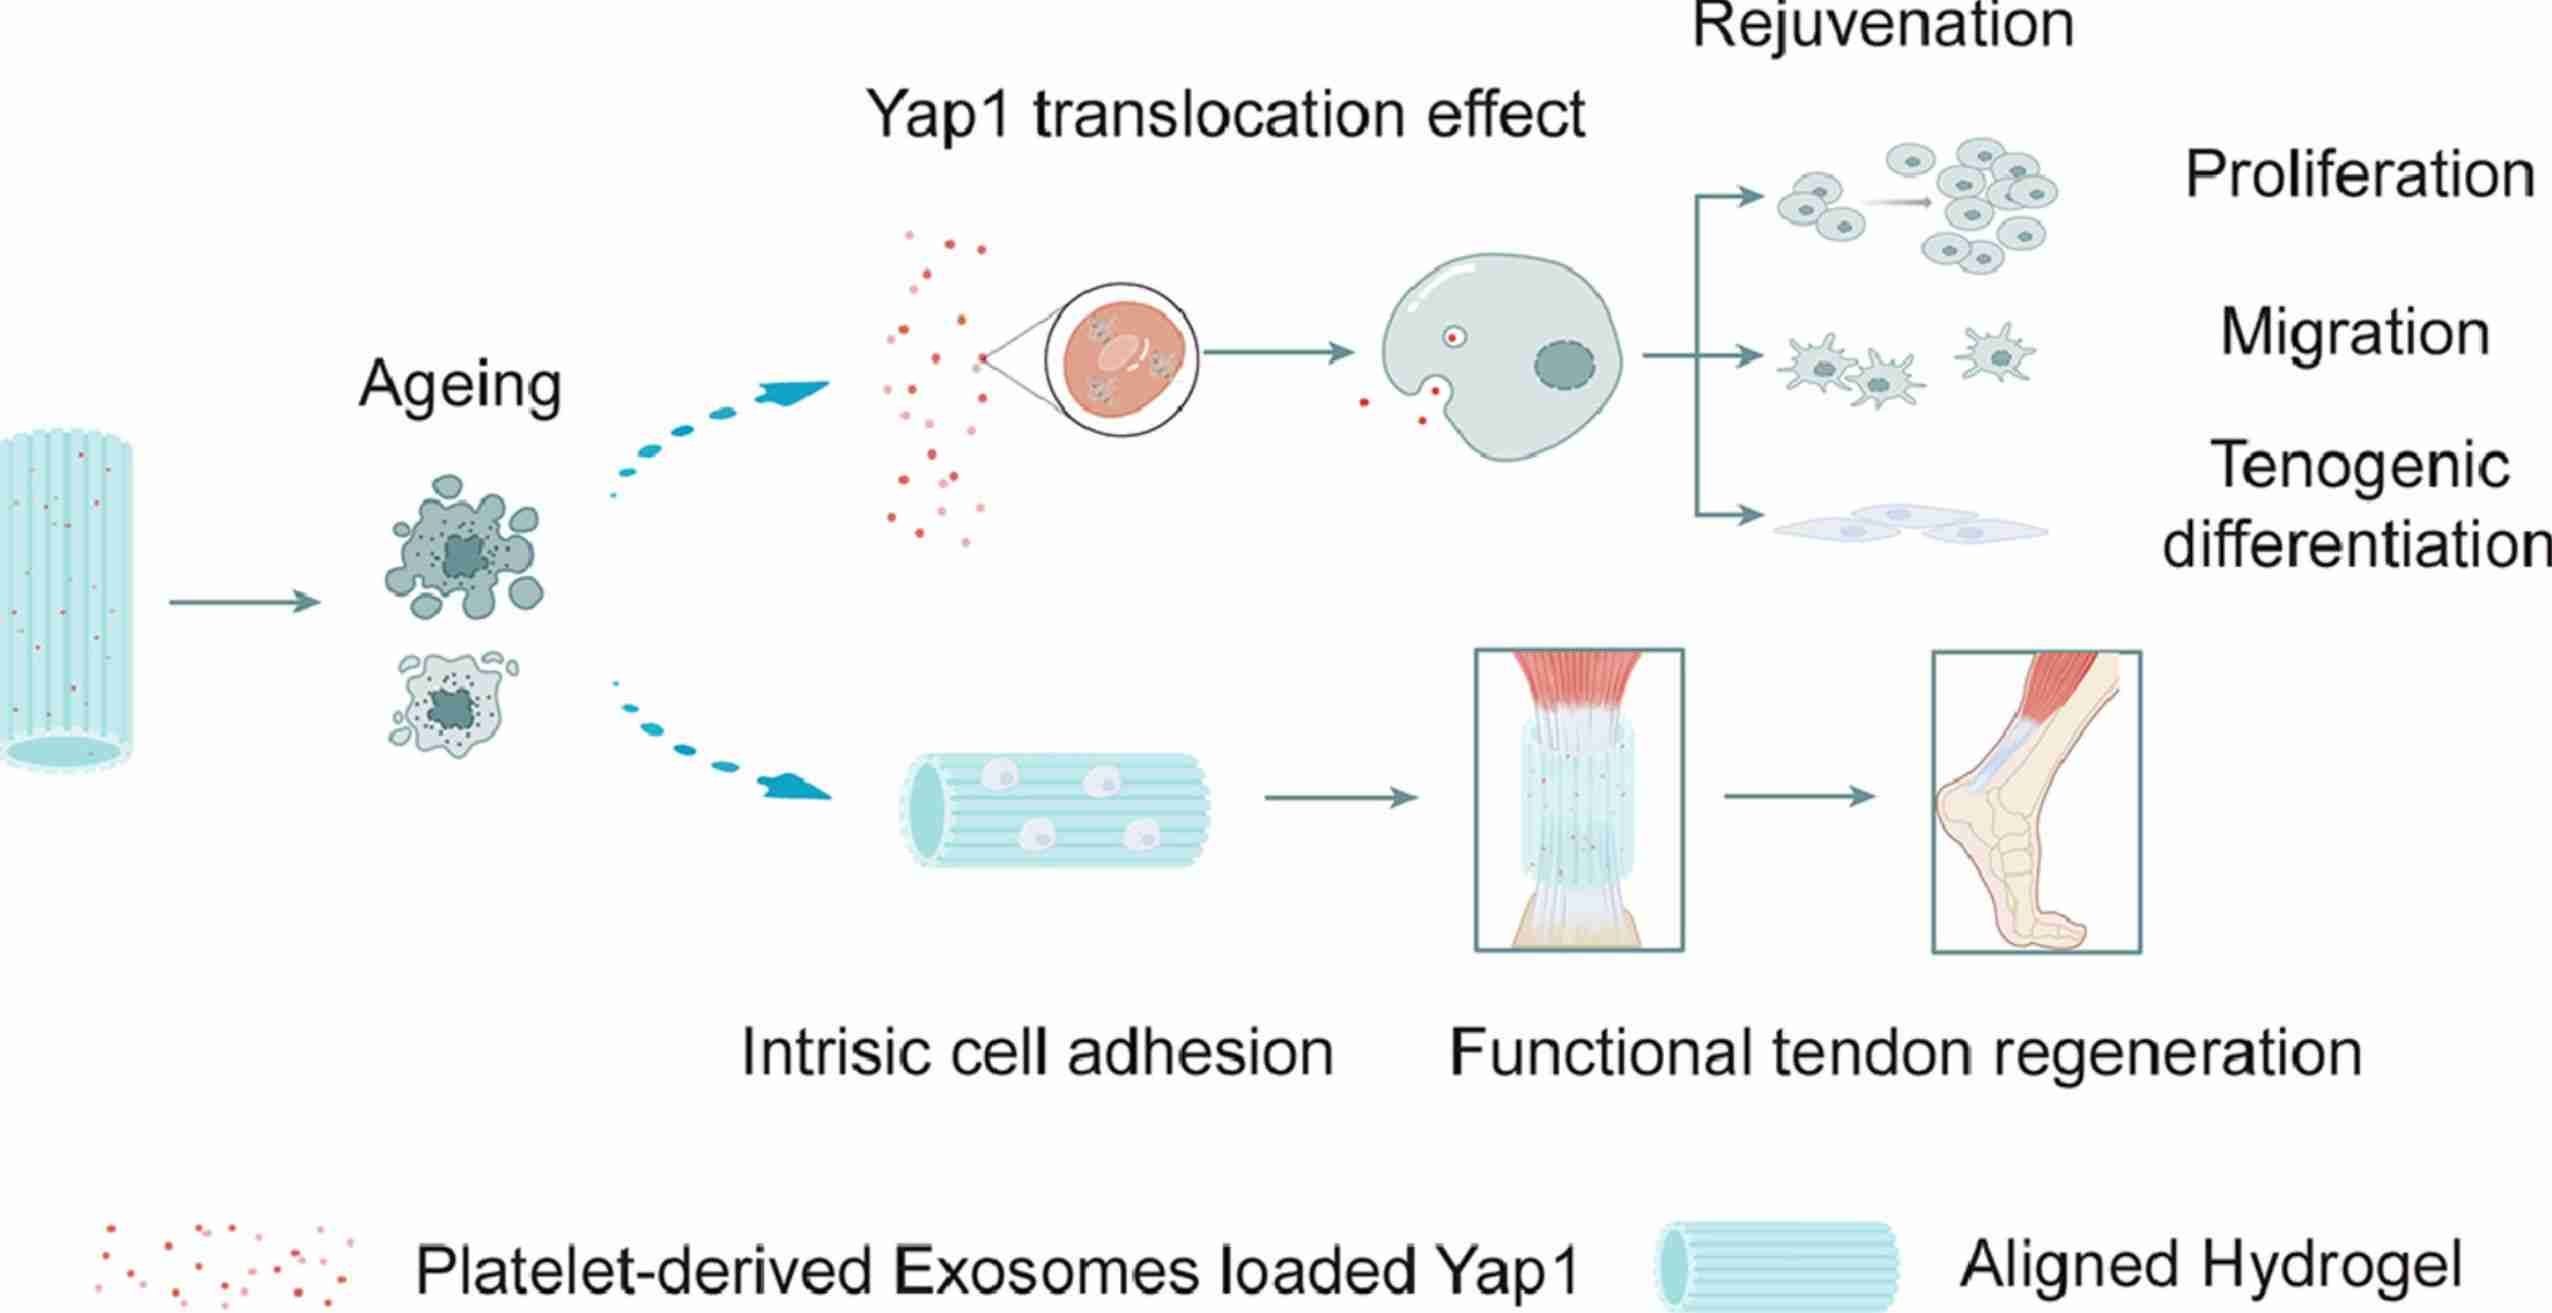 Figure 2. Exosome-loaded Yap1 to rejuvenate tendon stem/progenitor cells.